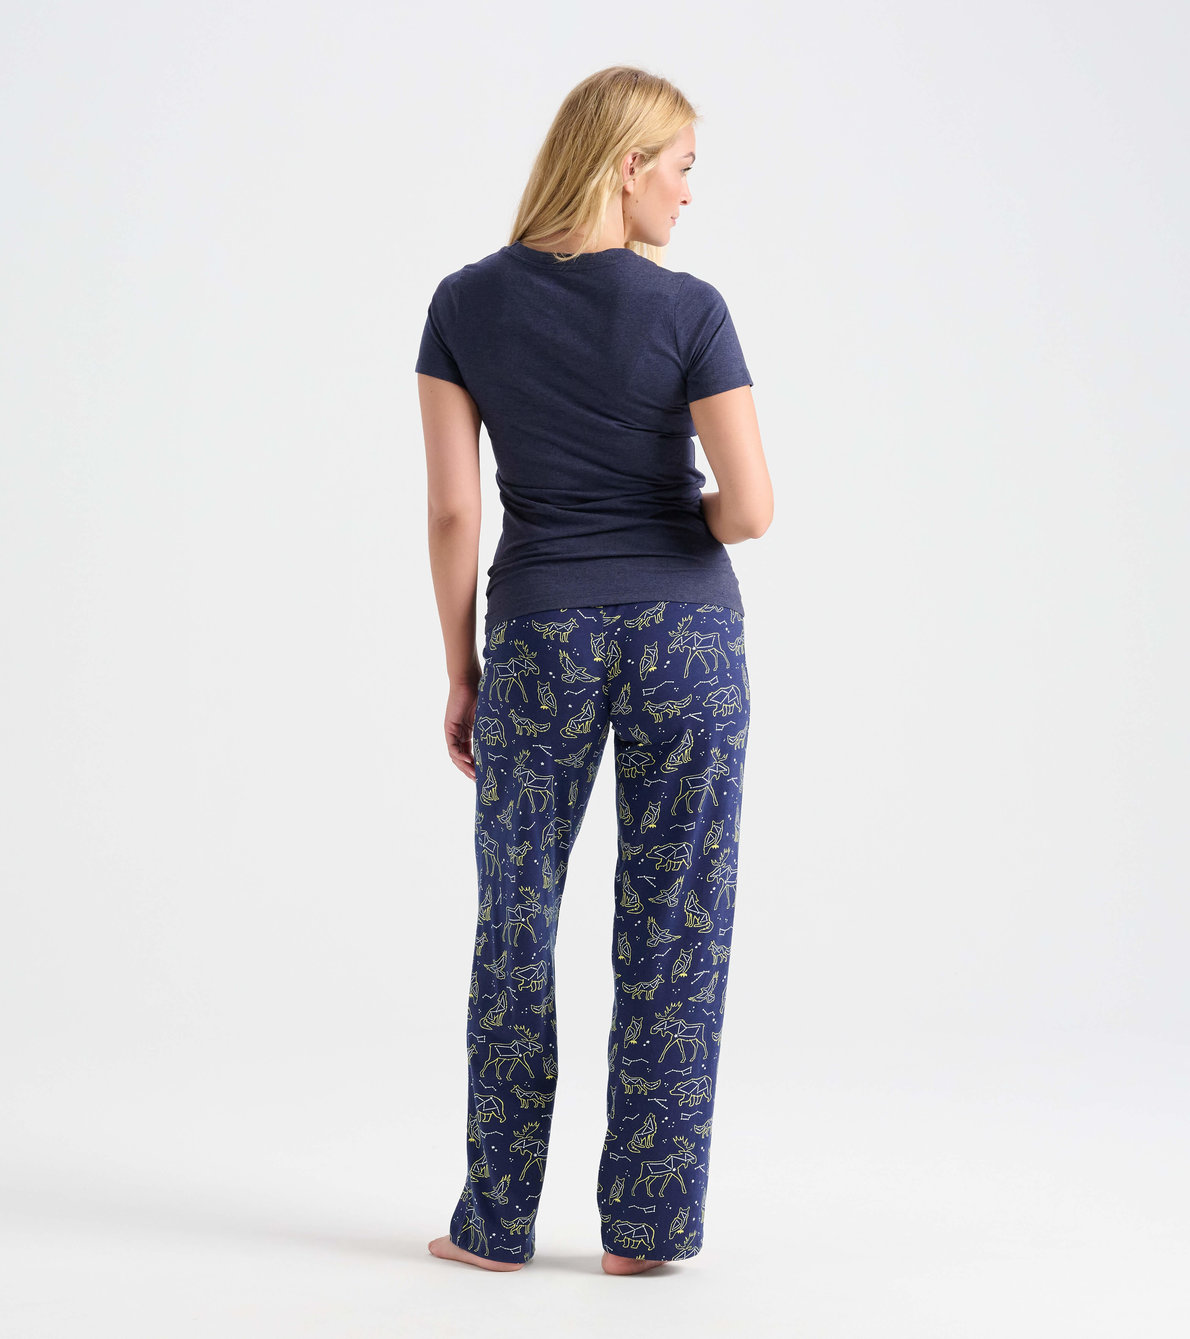 View larger image of Women's Star Gazer T-Shirt and Pants Pajama Separates